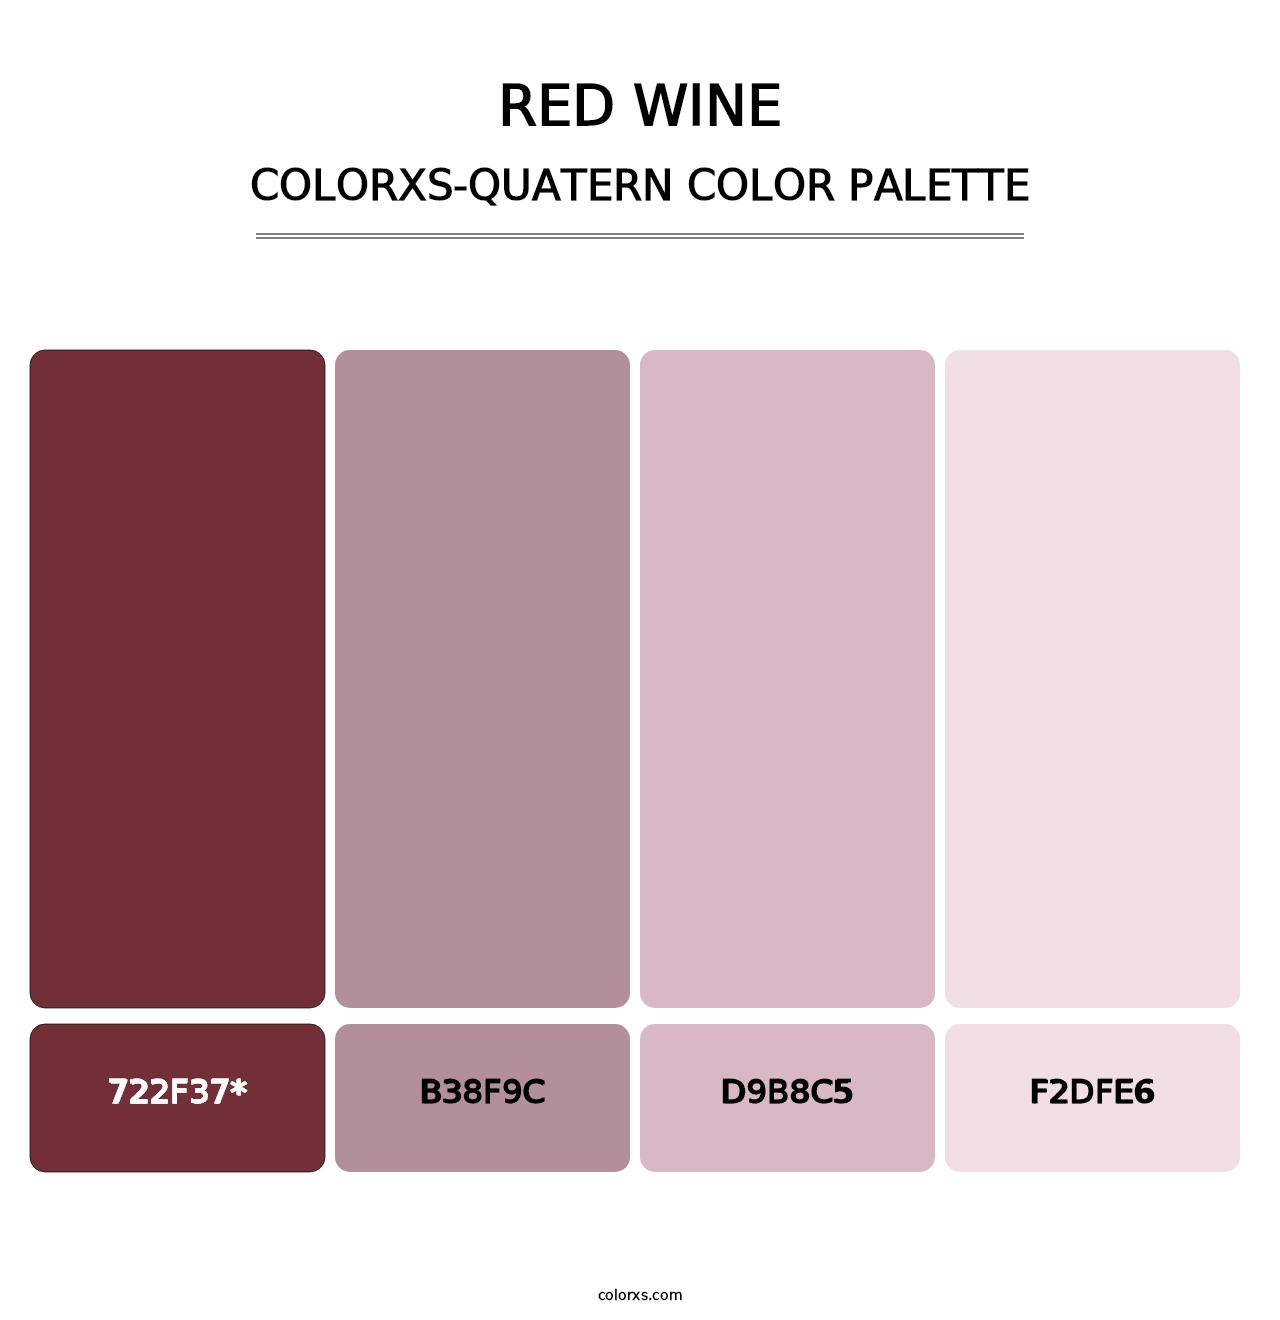 Red Wine - Colorxs Quatern Palette